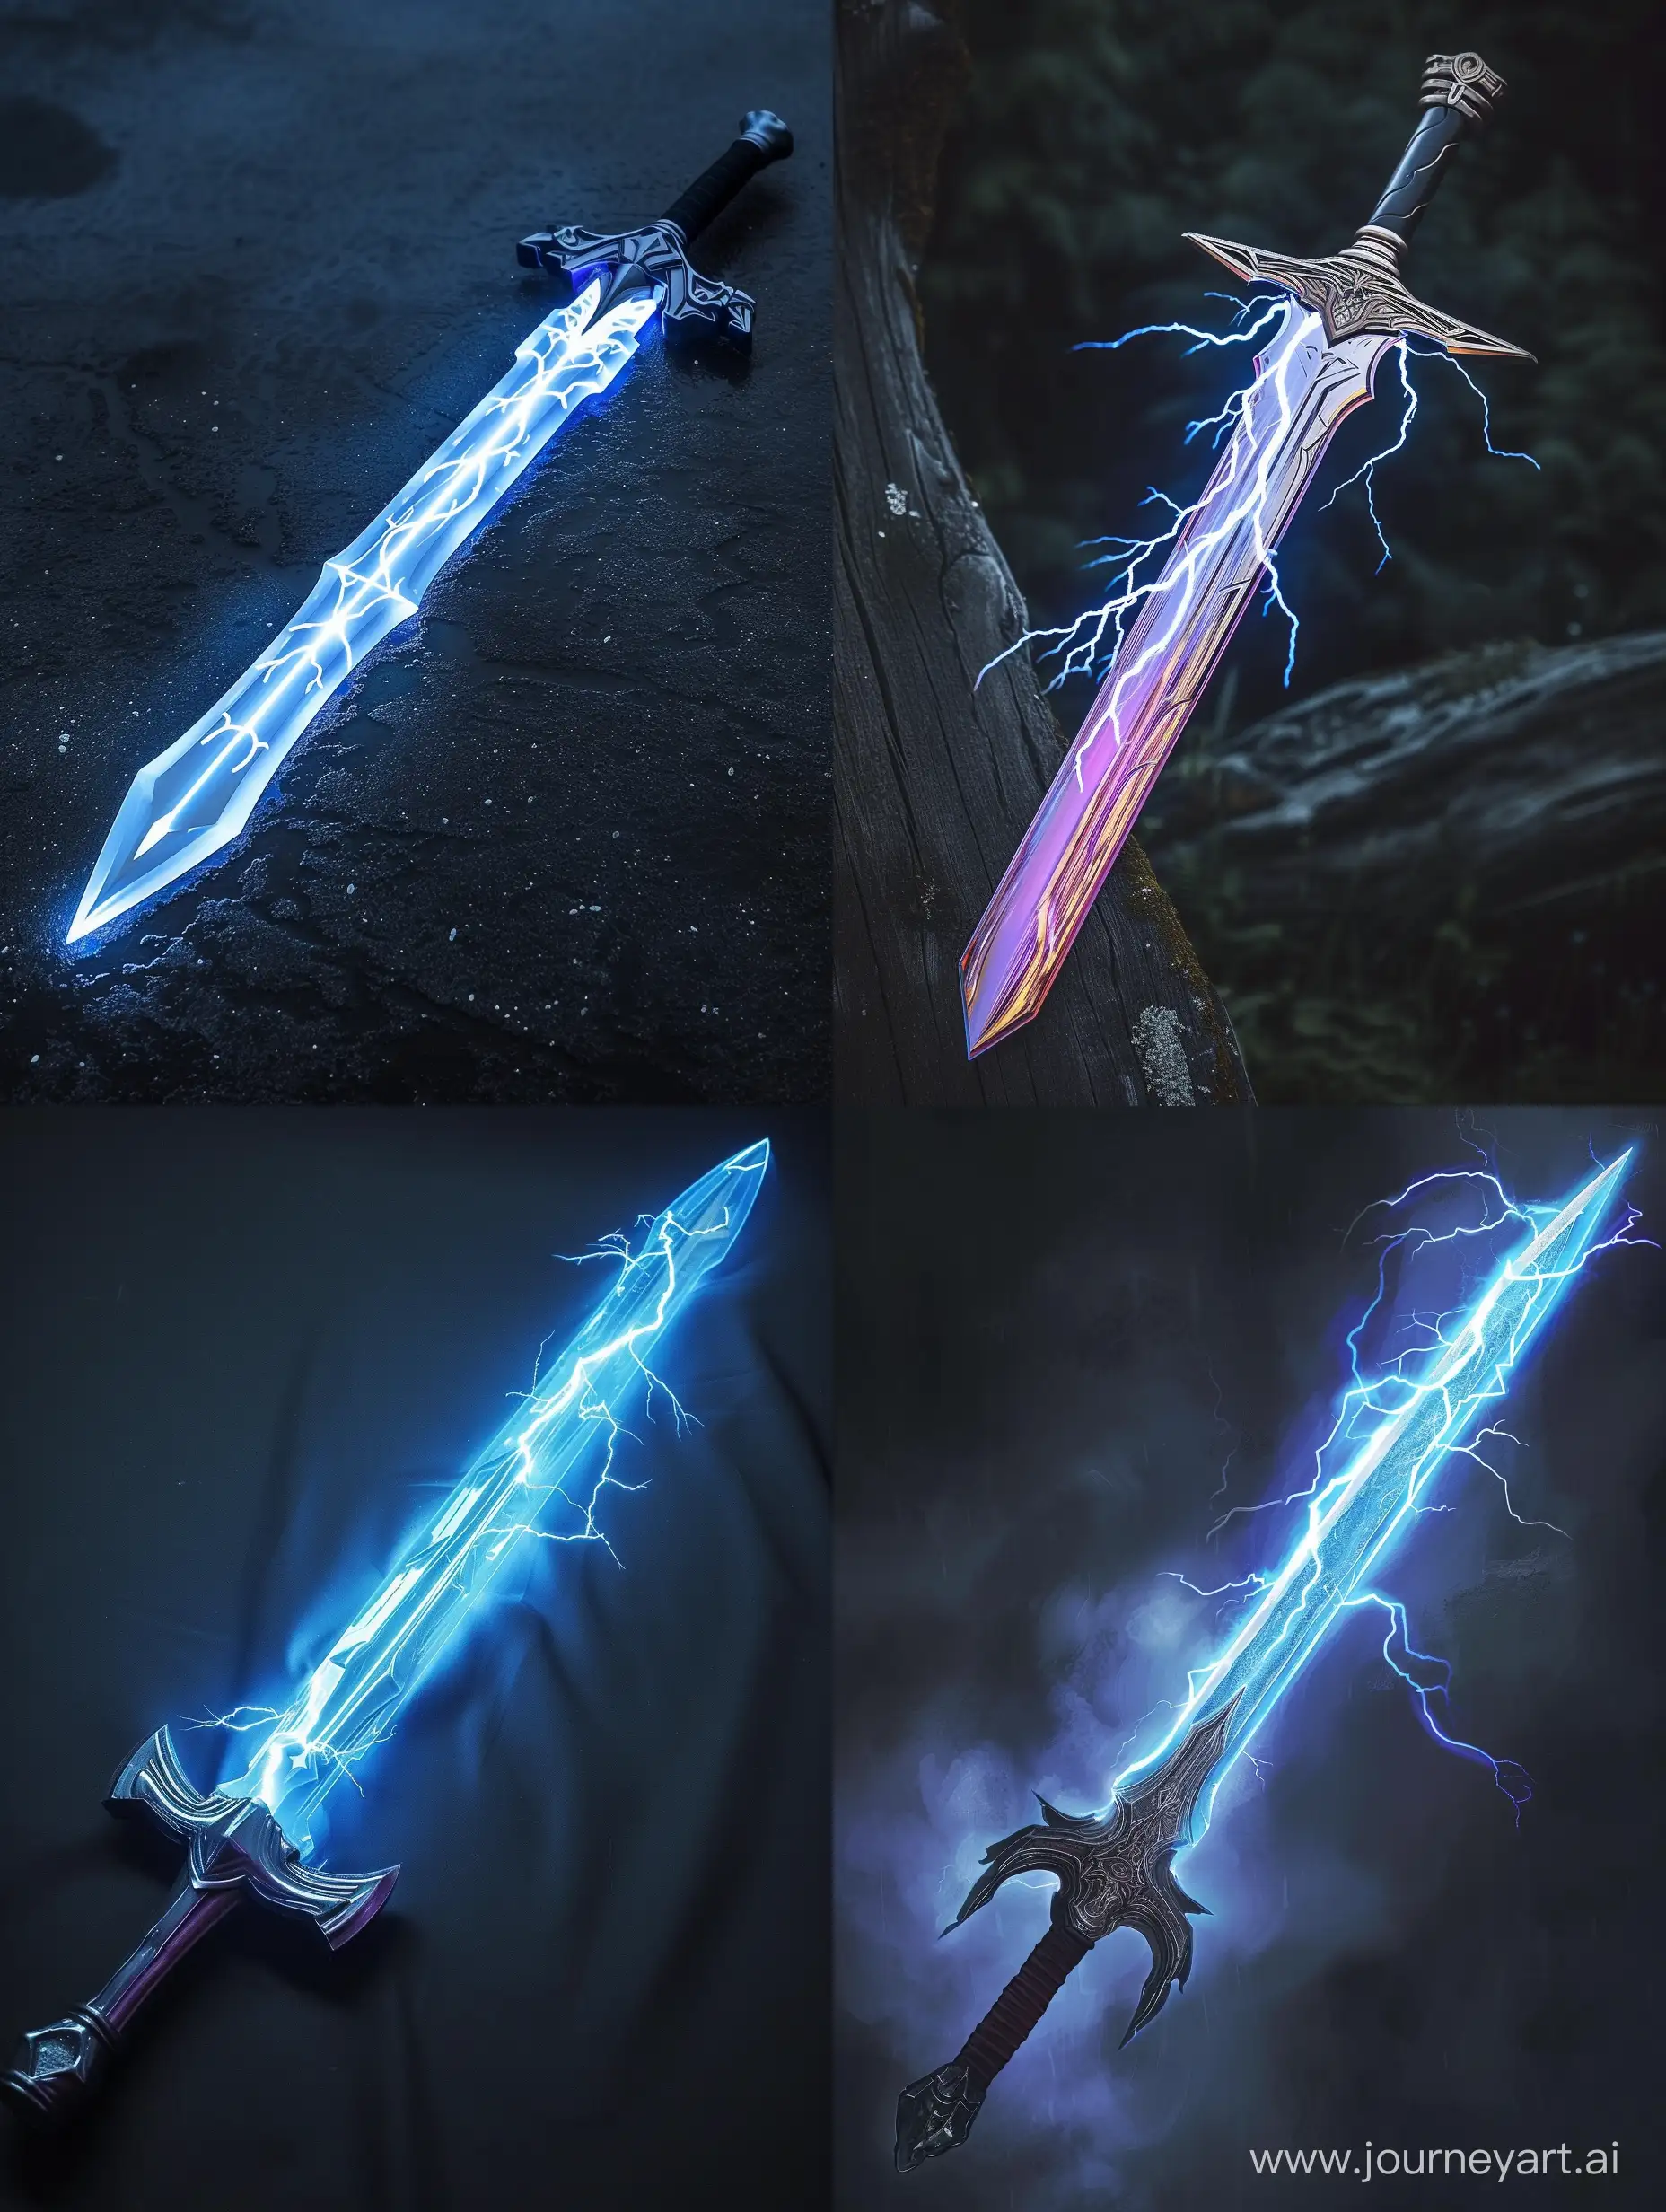 An anime style lightning sword